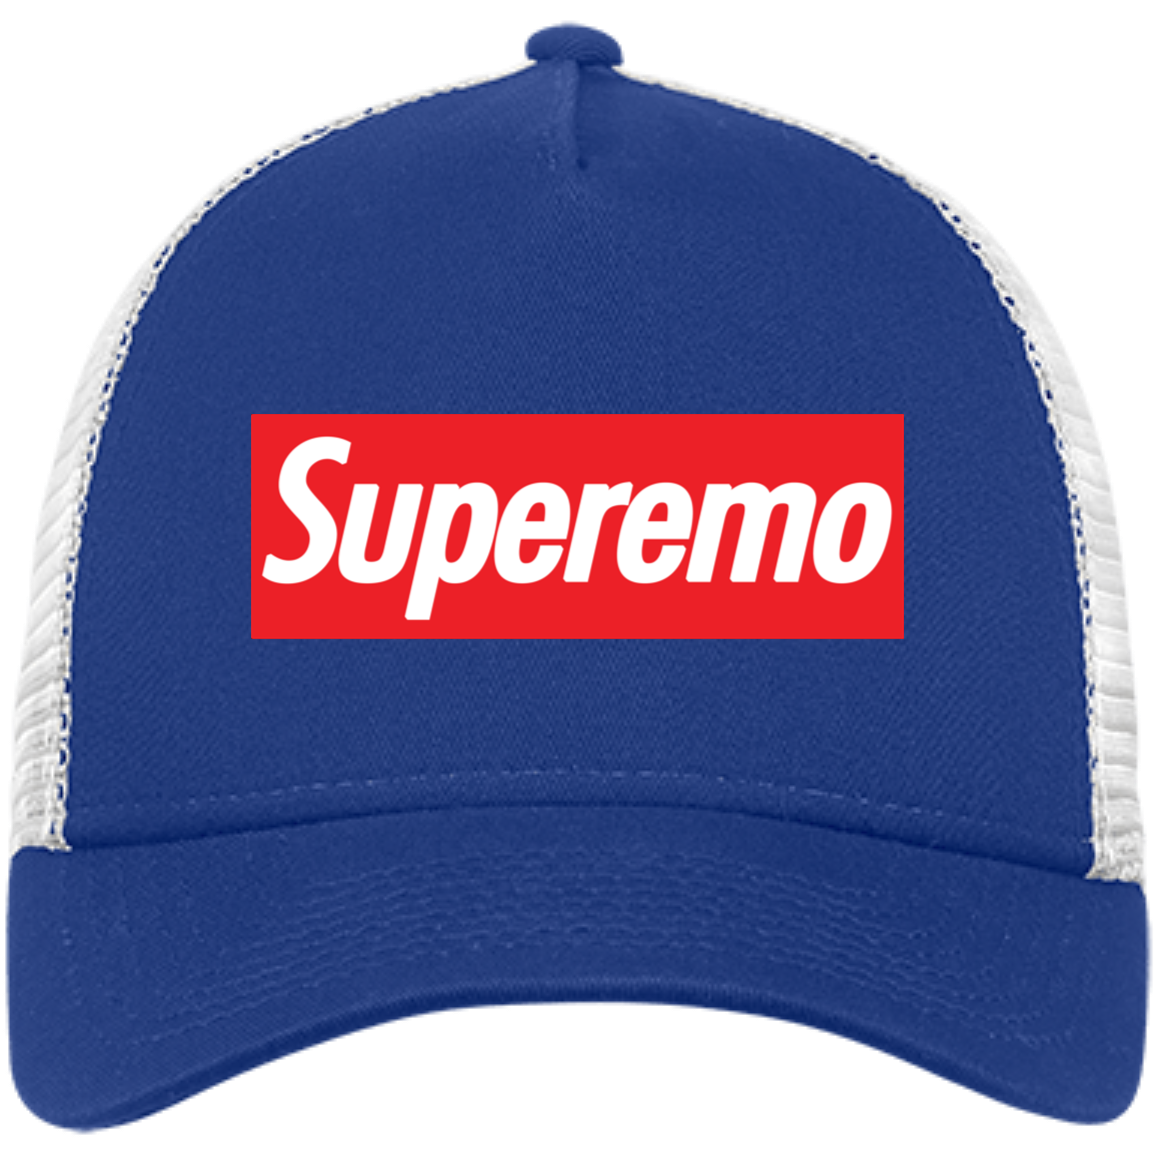 "SuperEmo" Embroidered Snapback Trucker Cap